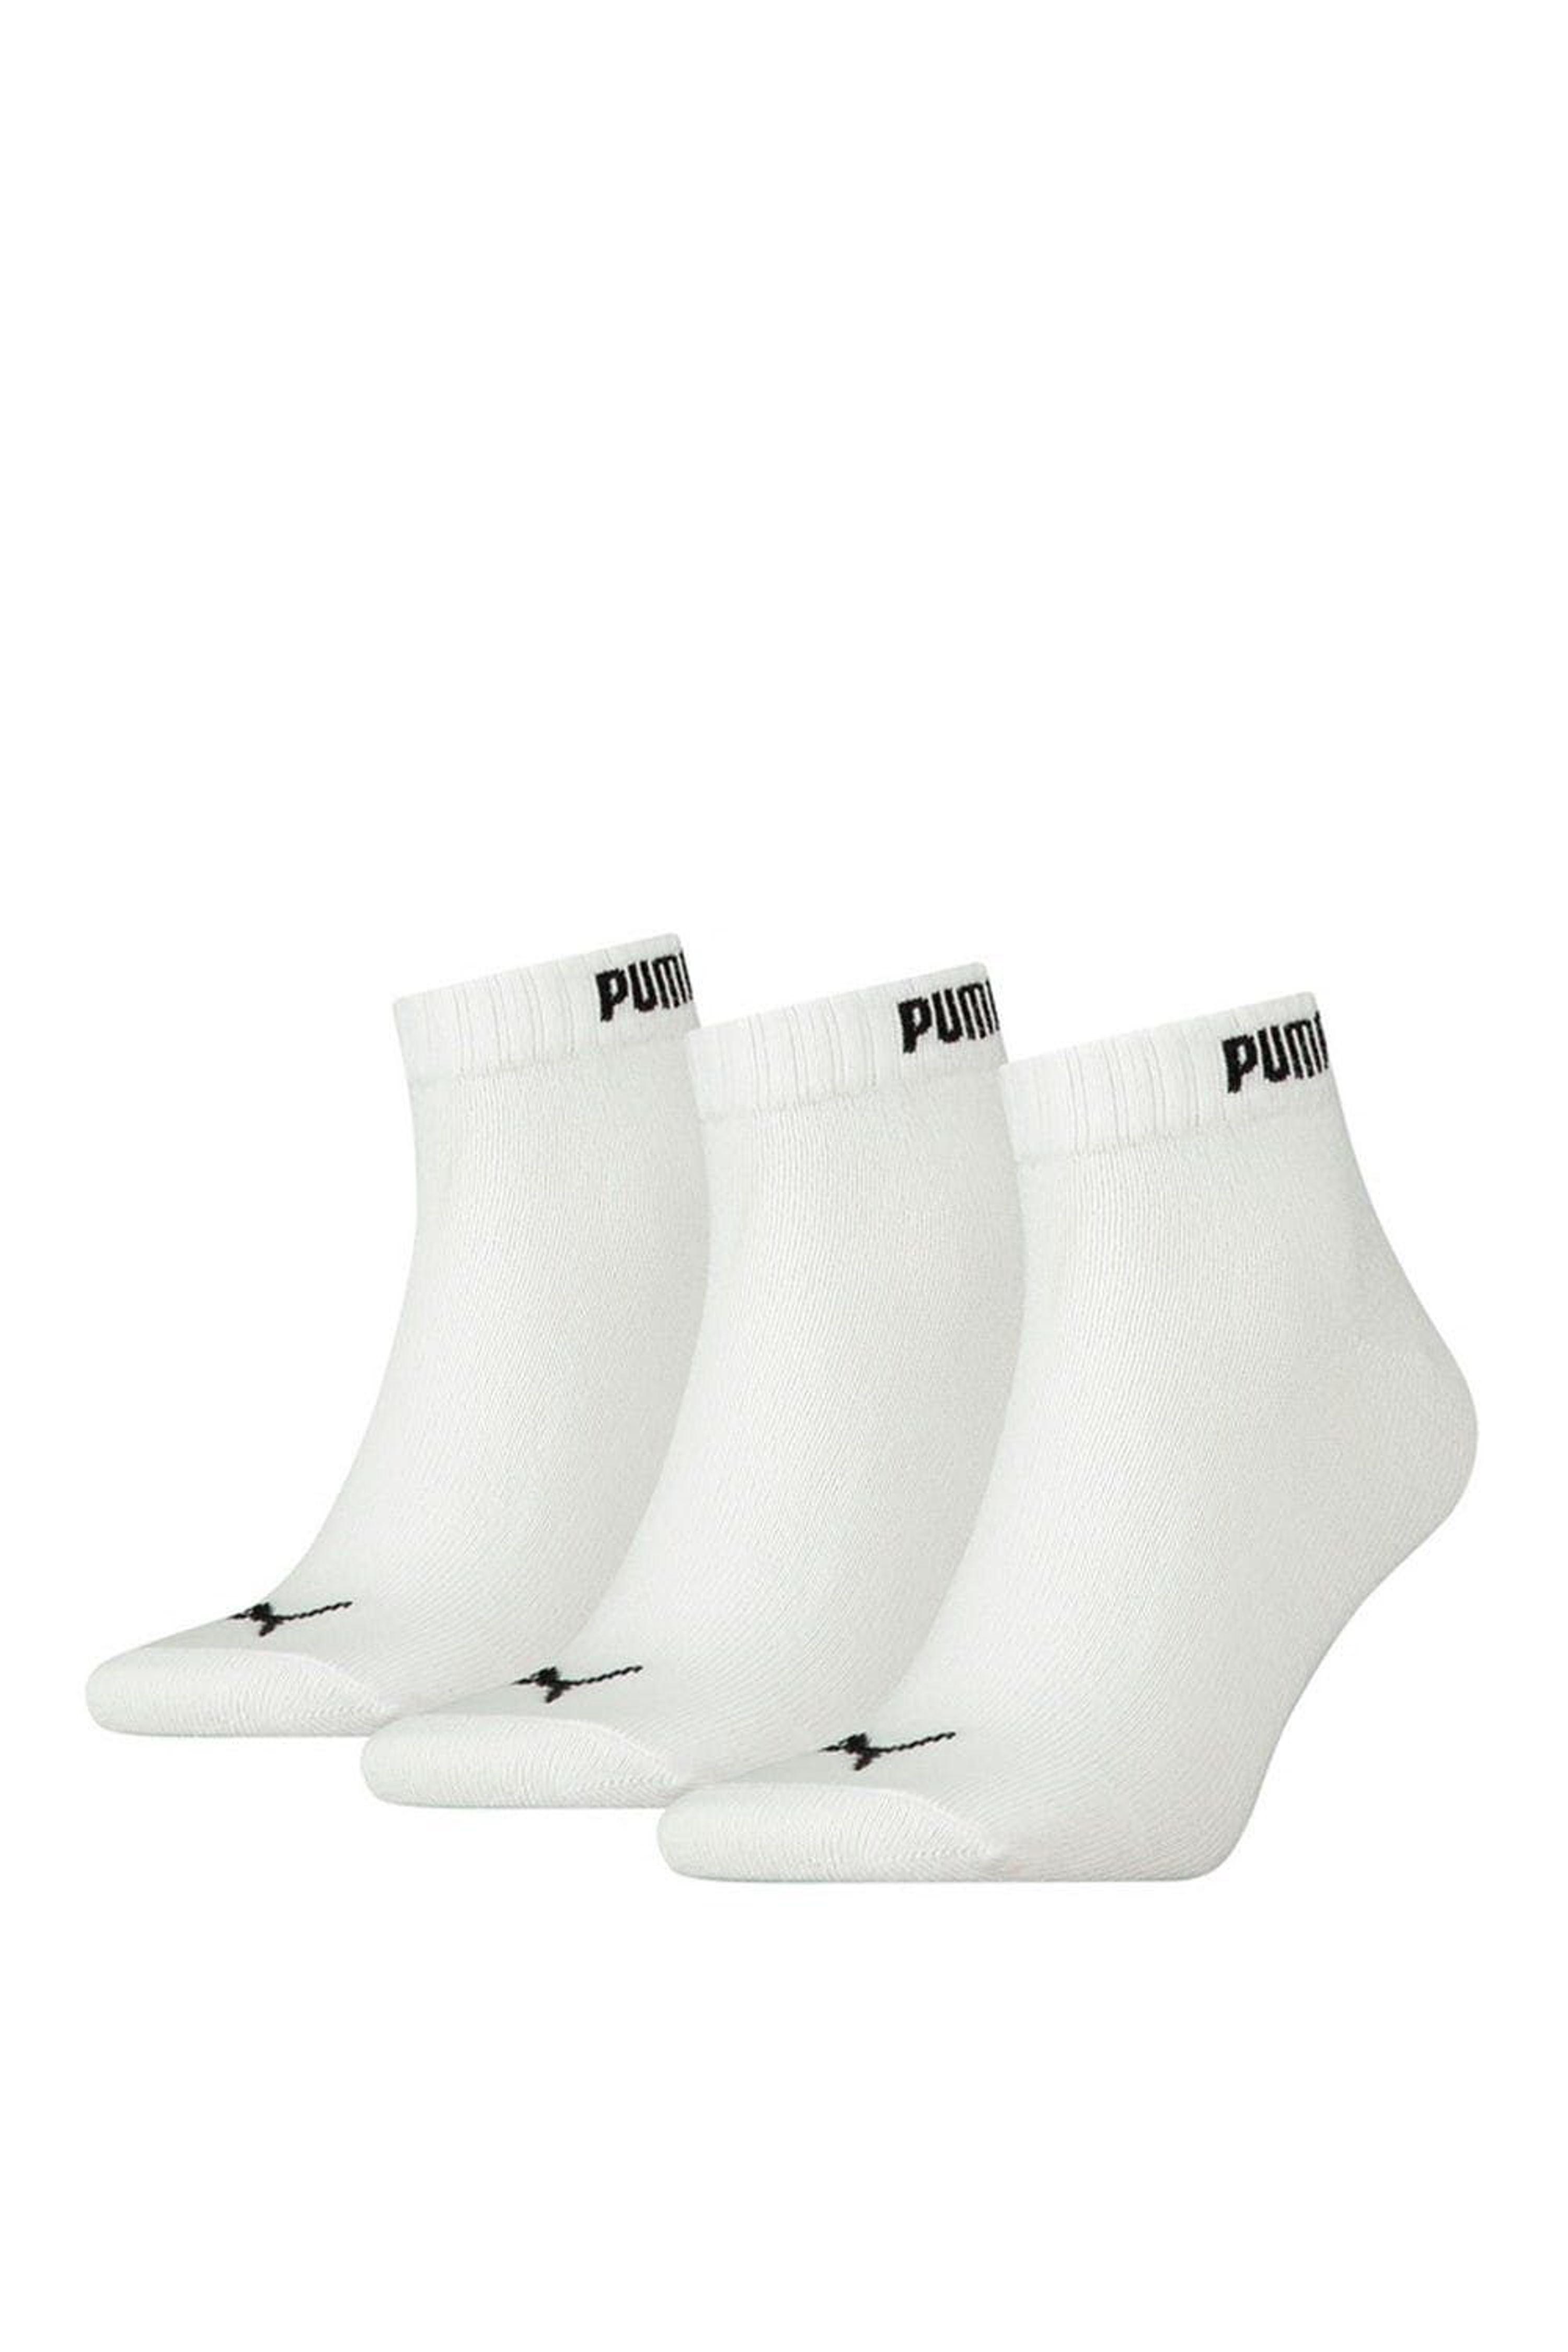 PUMA Adult Quarter Socks in White | Lyst